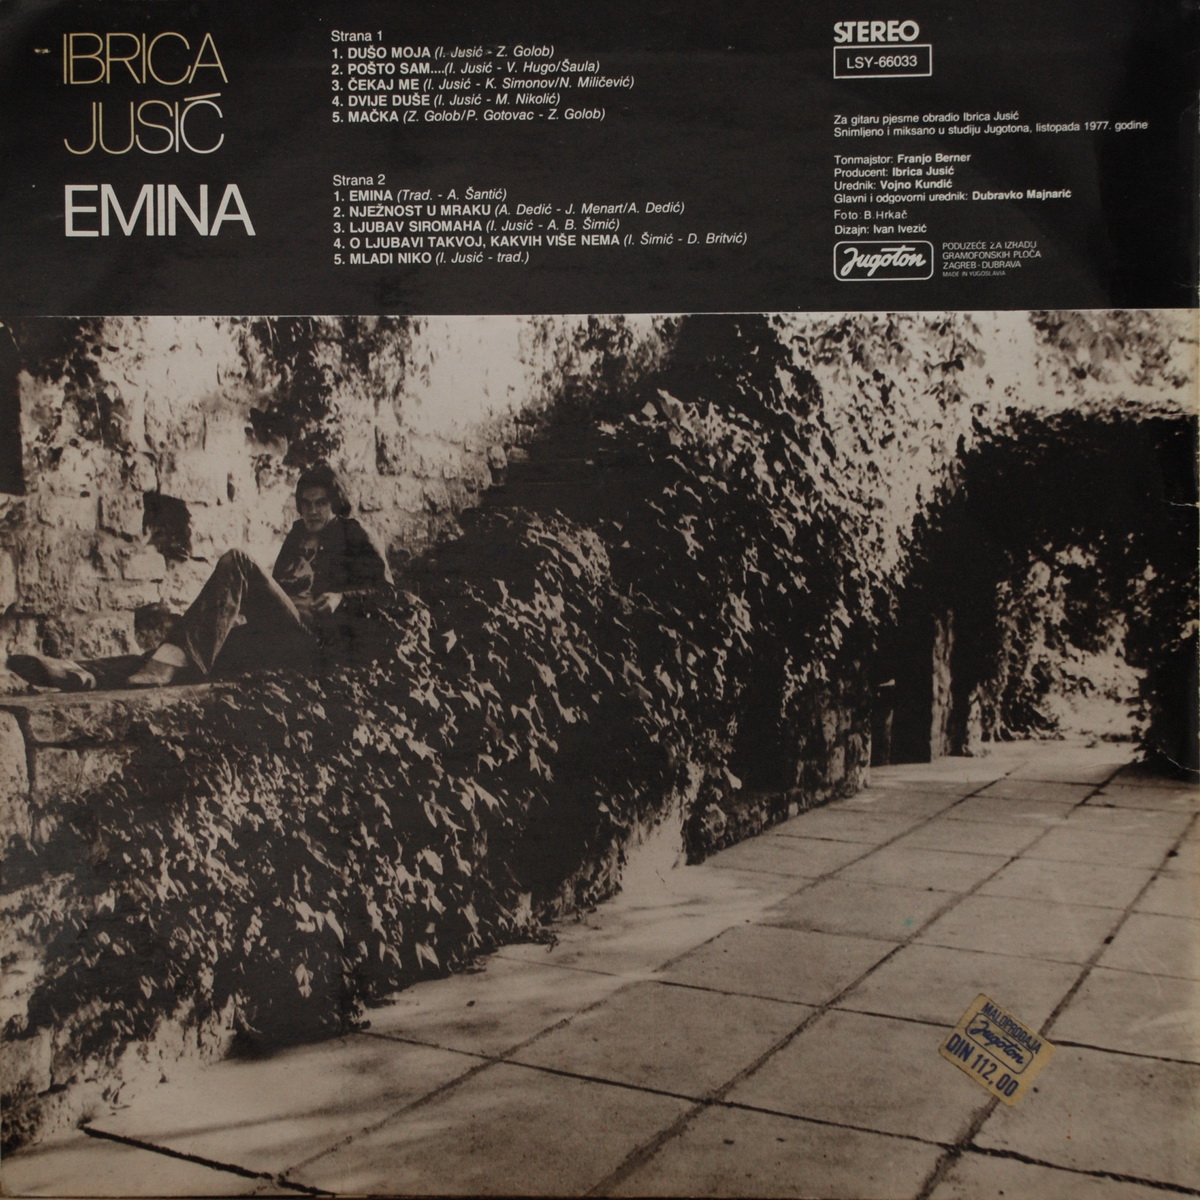 Ibrica Jusic 1977 Emina b